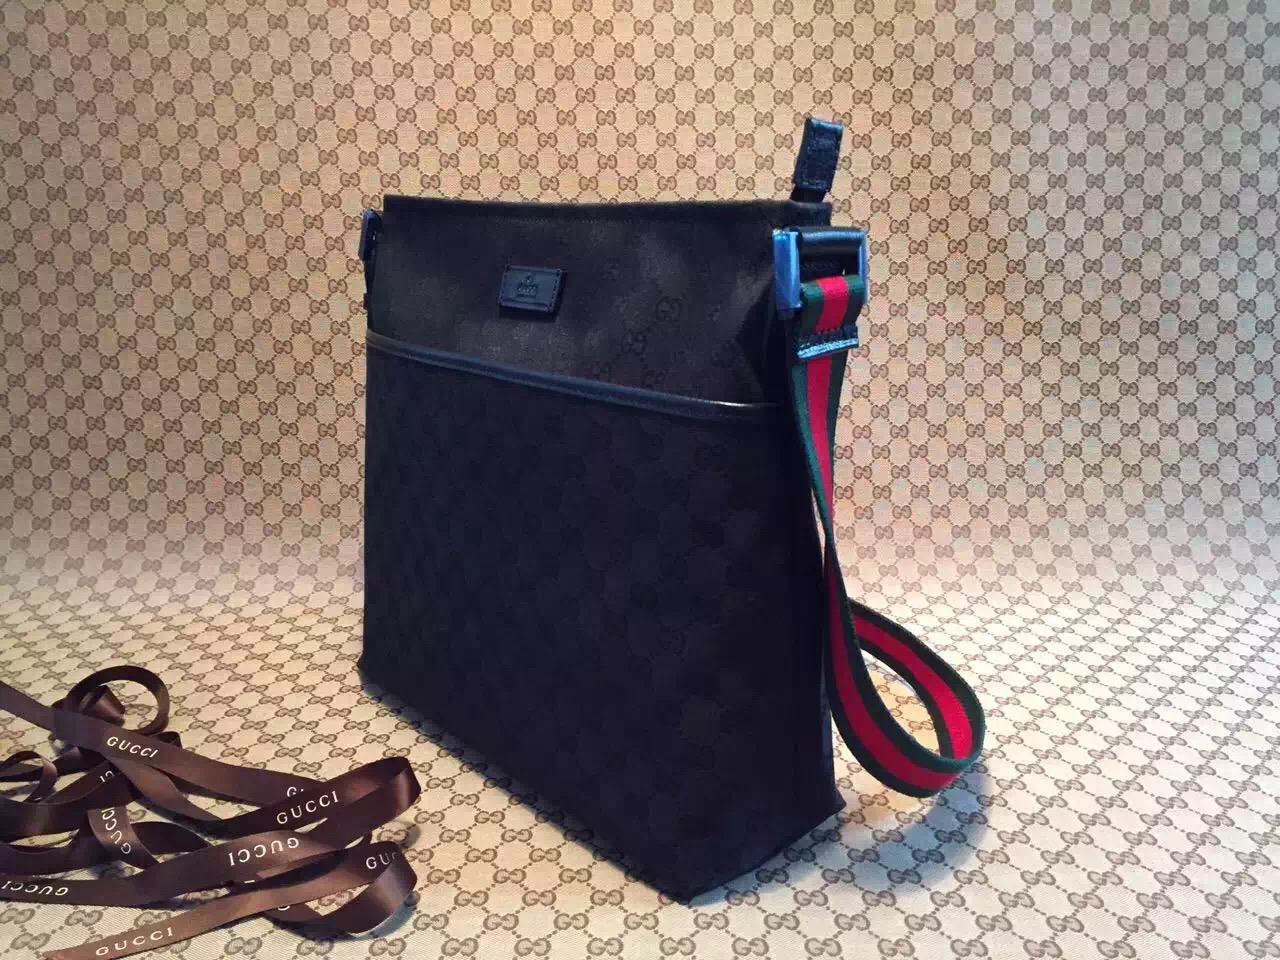 Gucci Bag in Black colour-GU50118 [GU50118] - $99.00USD : USPURSE ...